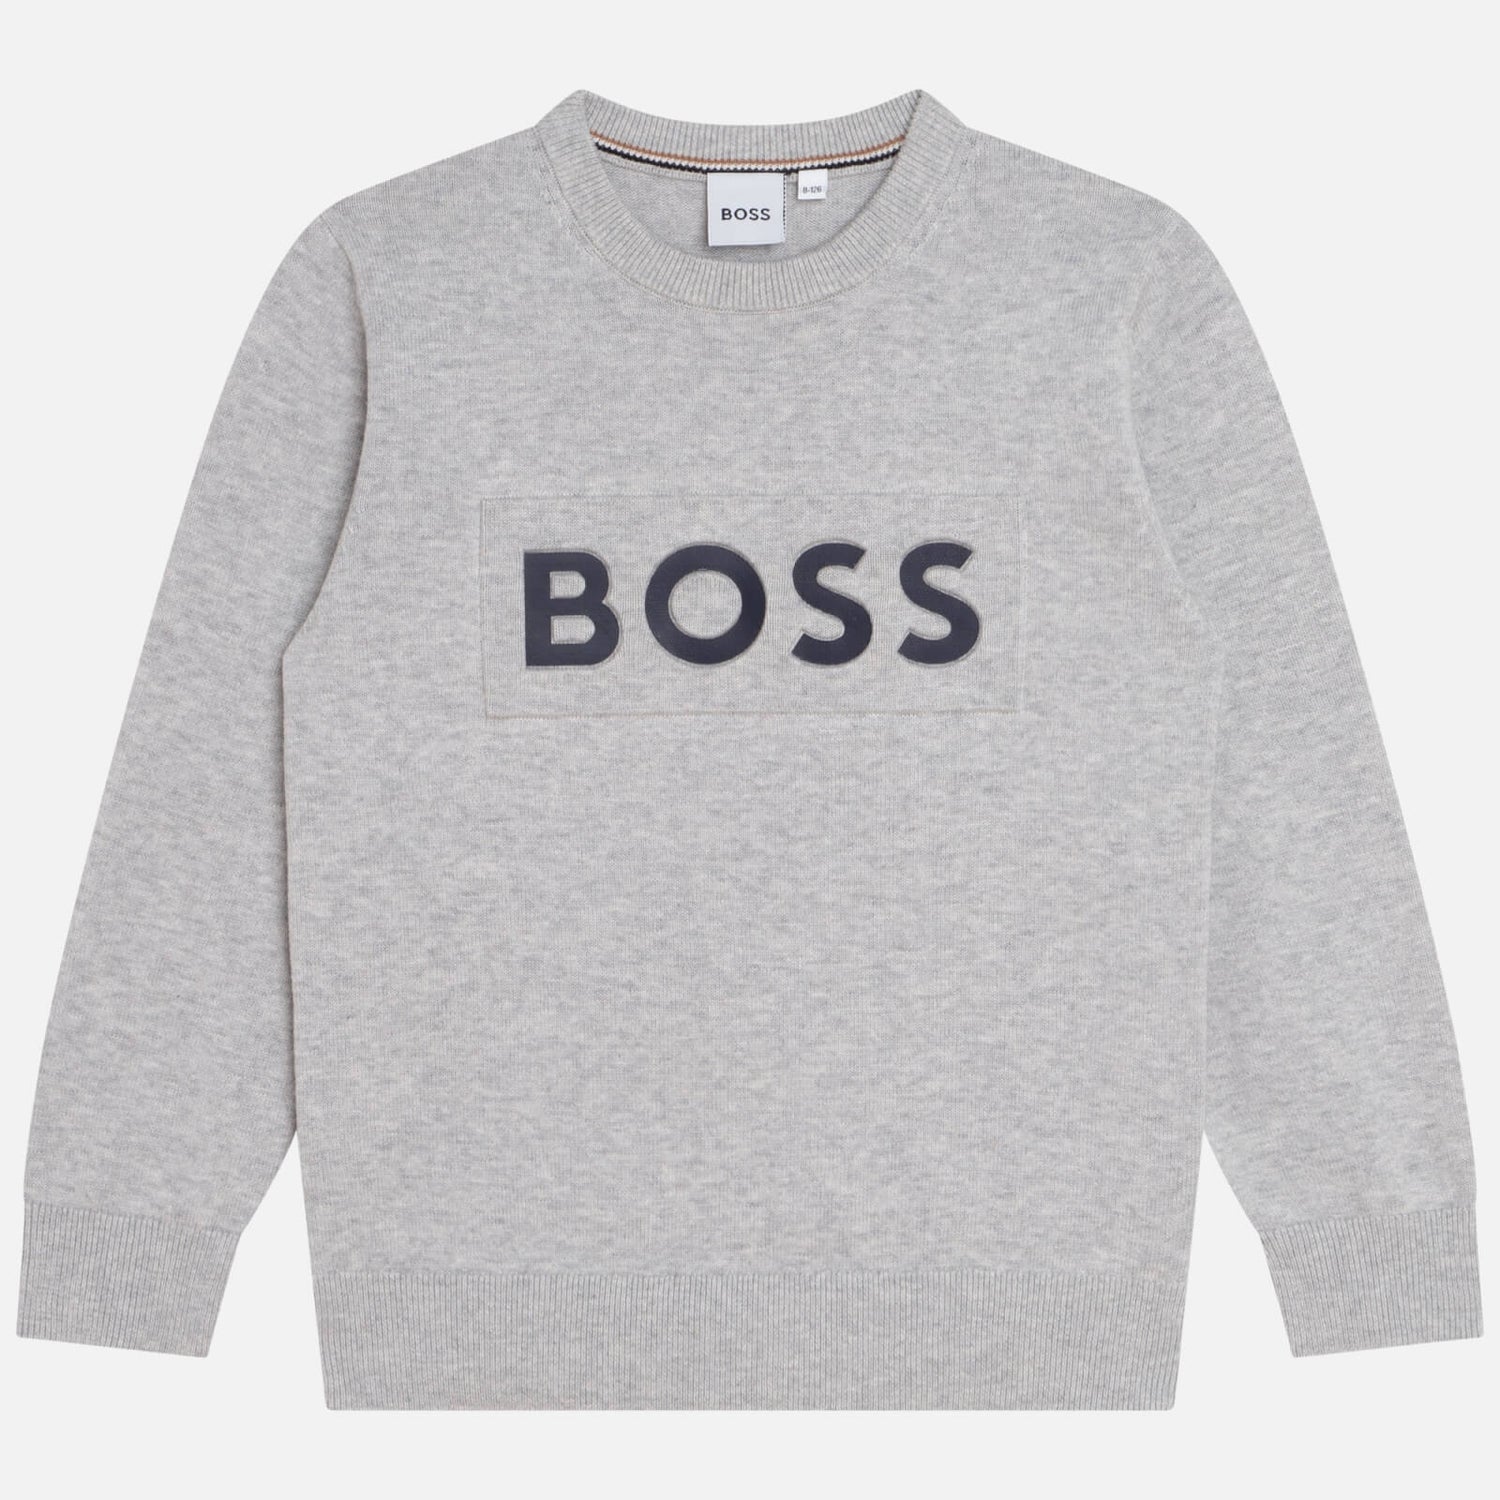 Hugo Boss Cotton Sweatshirt - 4 Years